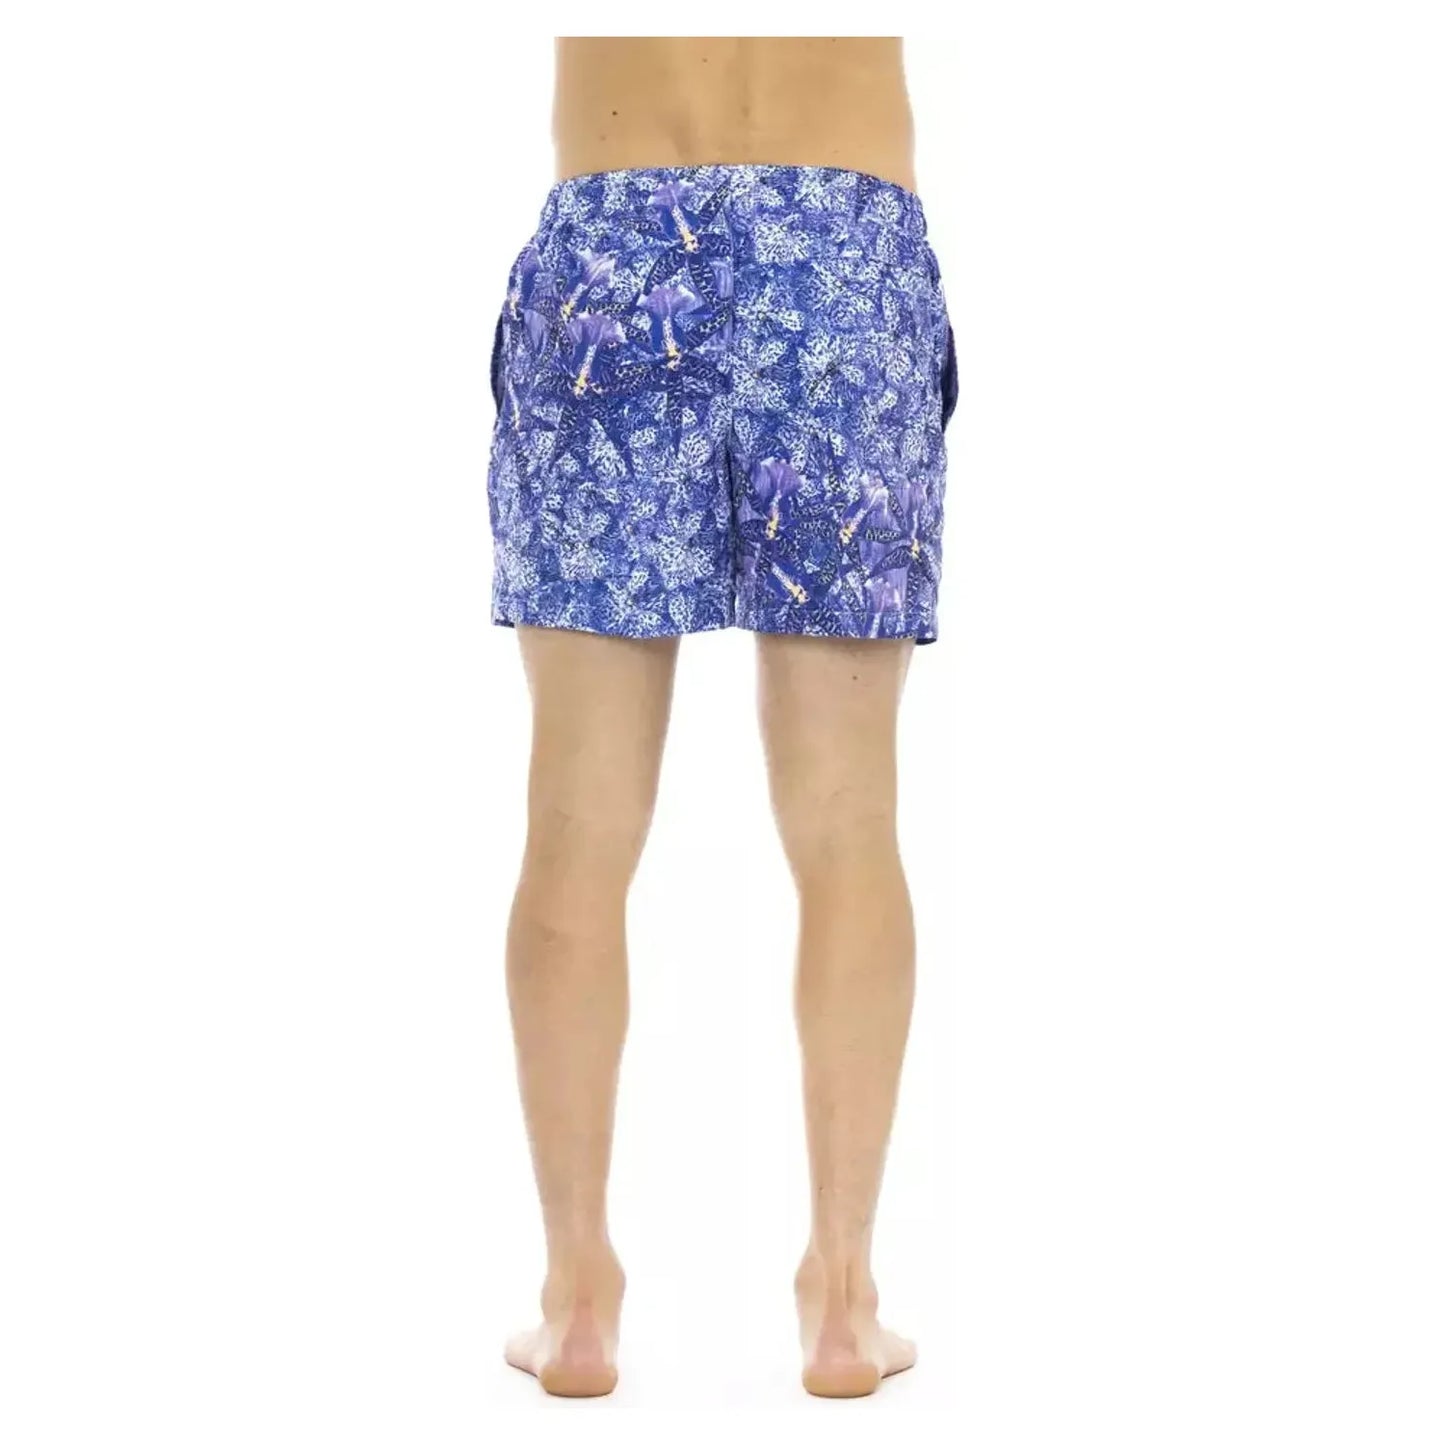 Just Cavalli Chic Light Blue Printed Beach Shorts light-blue-swimwear-1